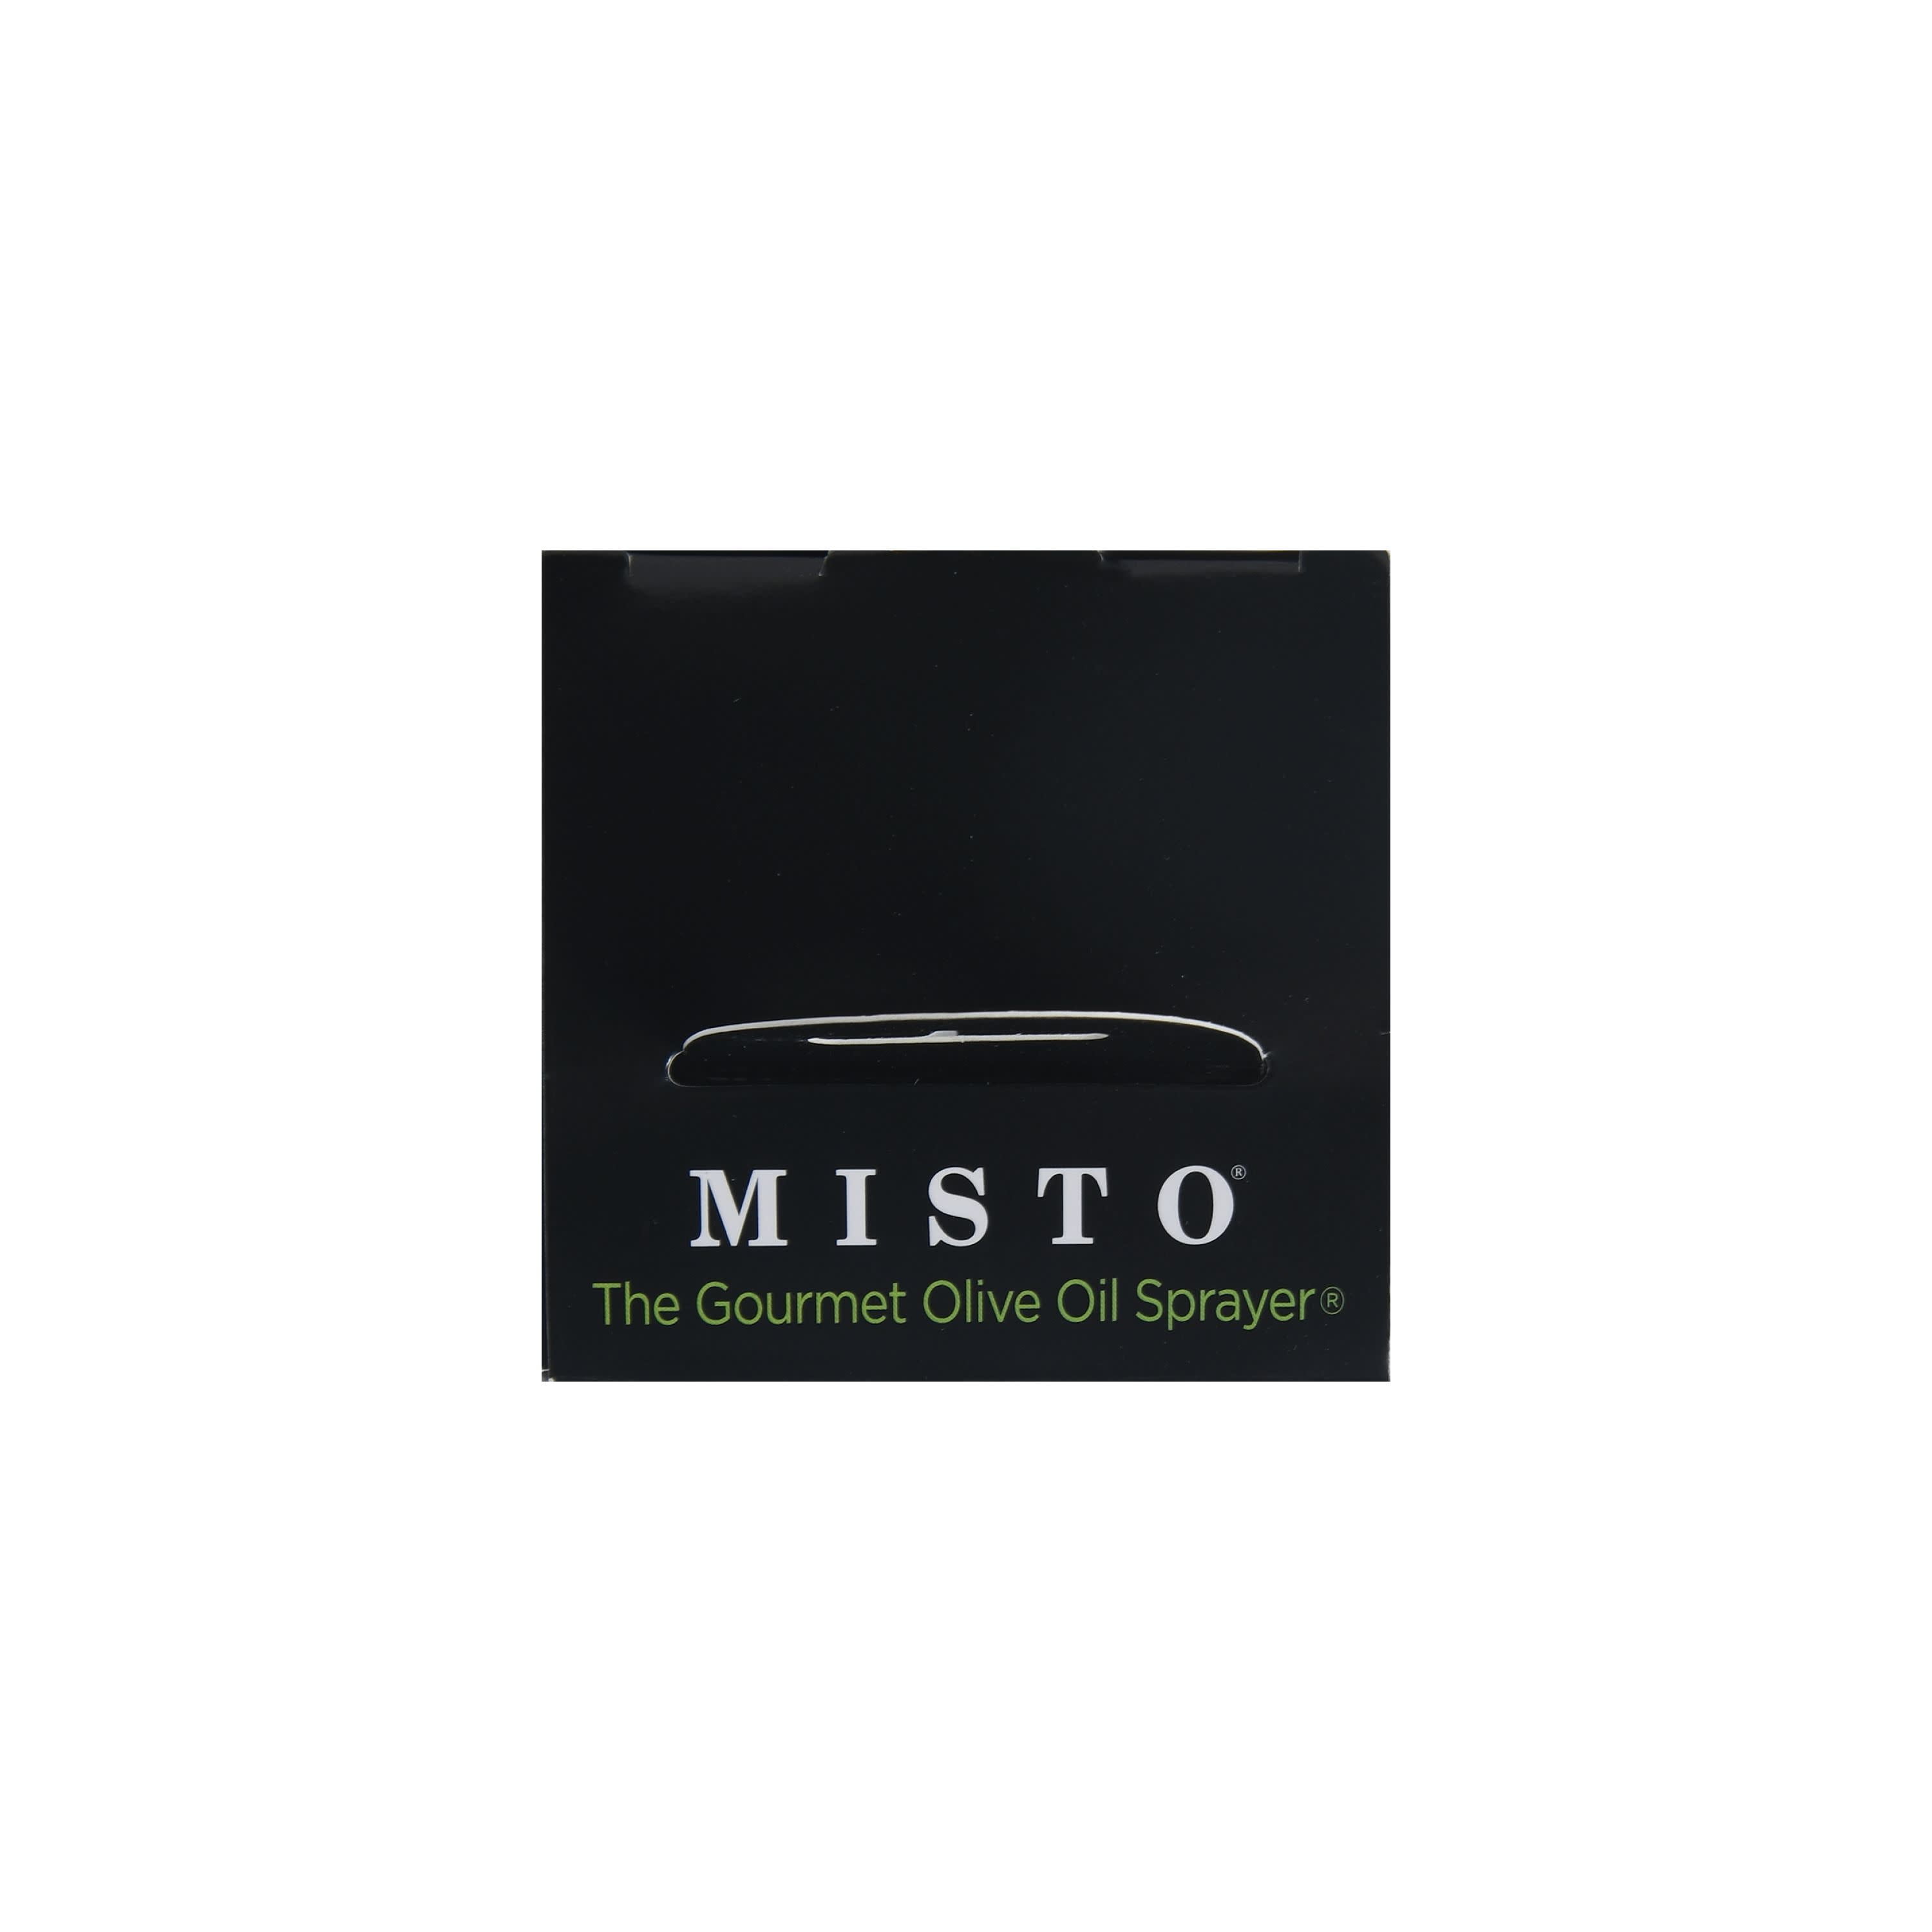  Misto Brushed Aluminum Oil Sprayer, Silver: Home & Kitchen